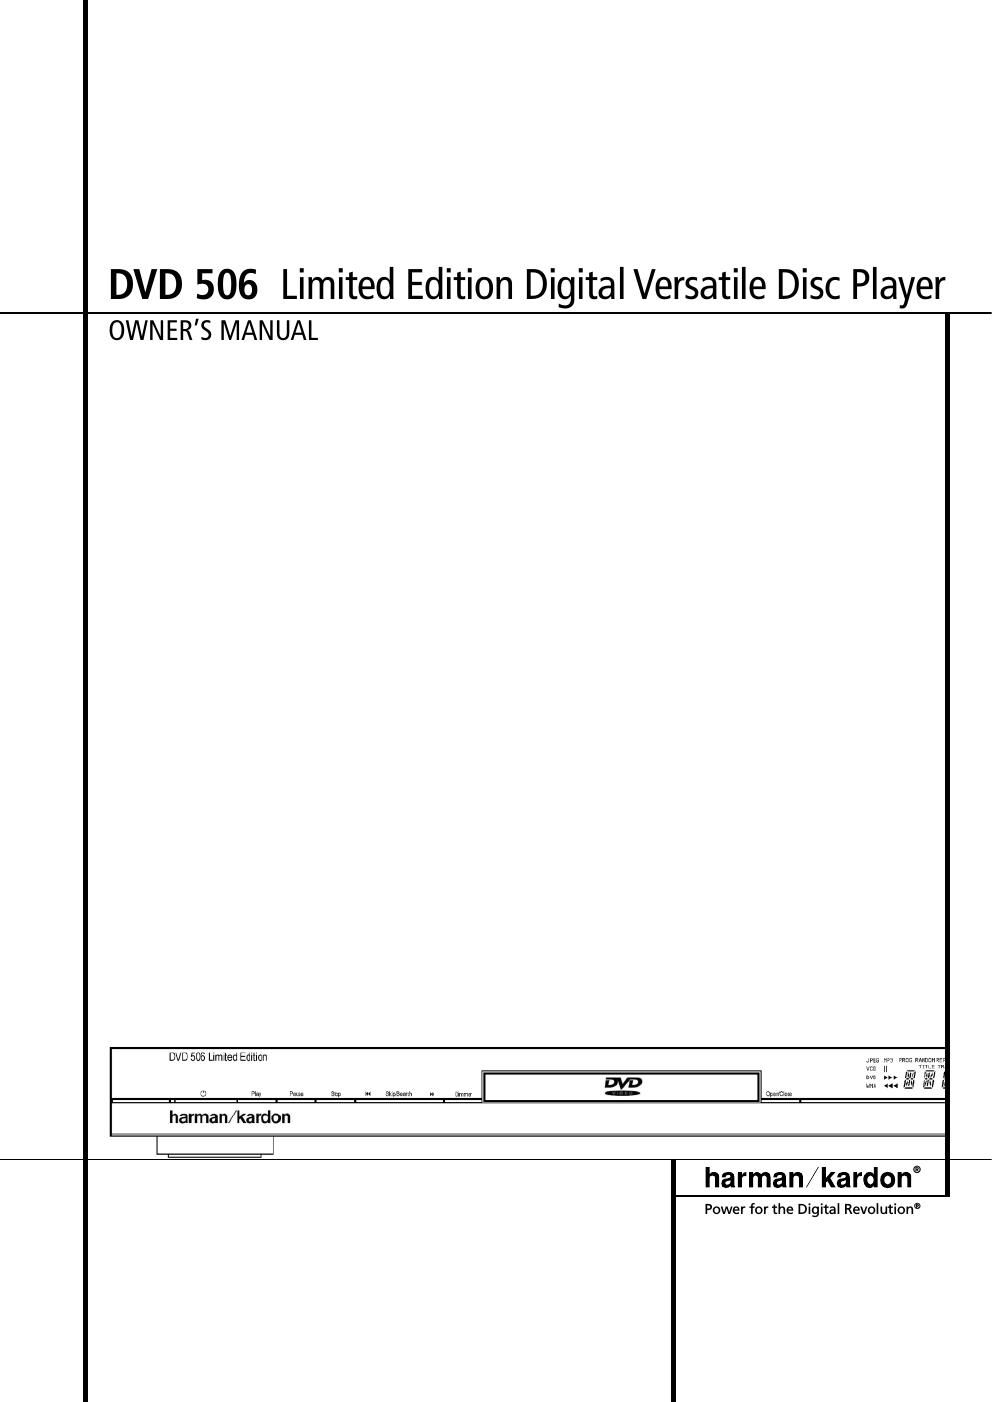 harman kardon dvd 506 owners manual